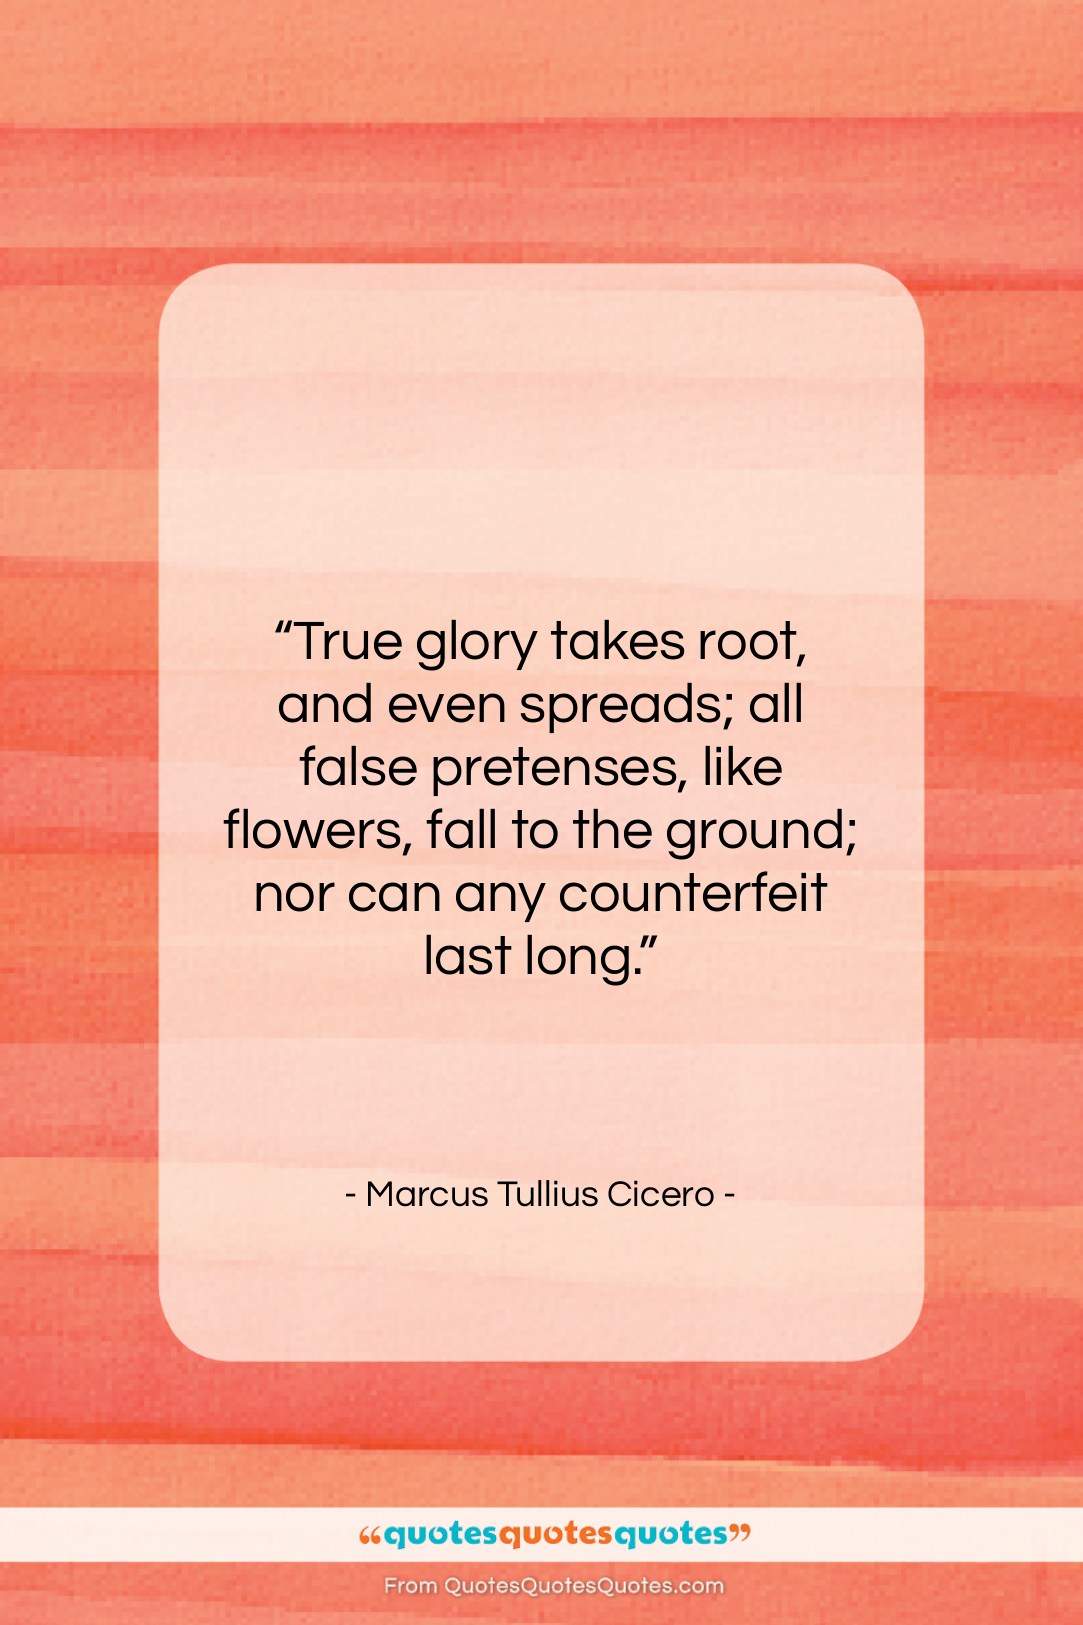 Marcus Tullius Cicero quote: “True glory takes root, and even spreads;…”- at QuotesQuotesQuotes.com